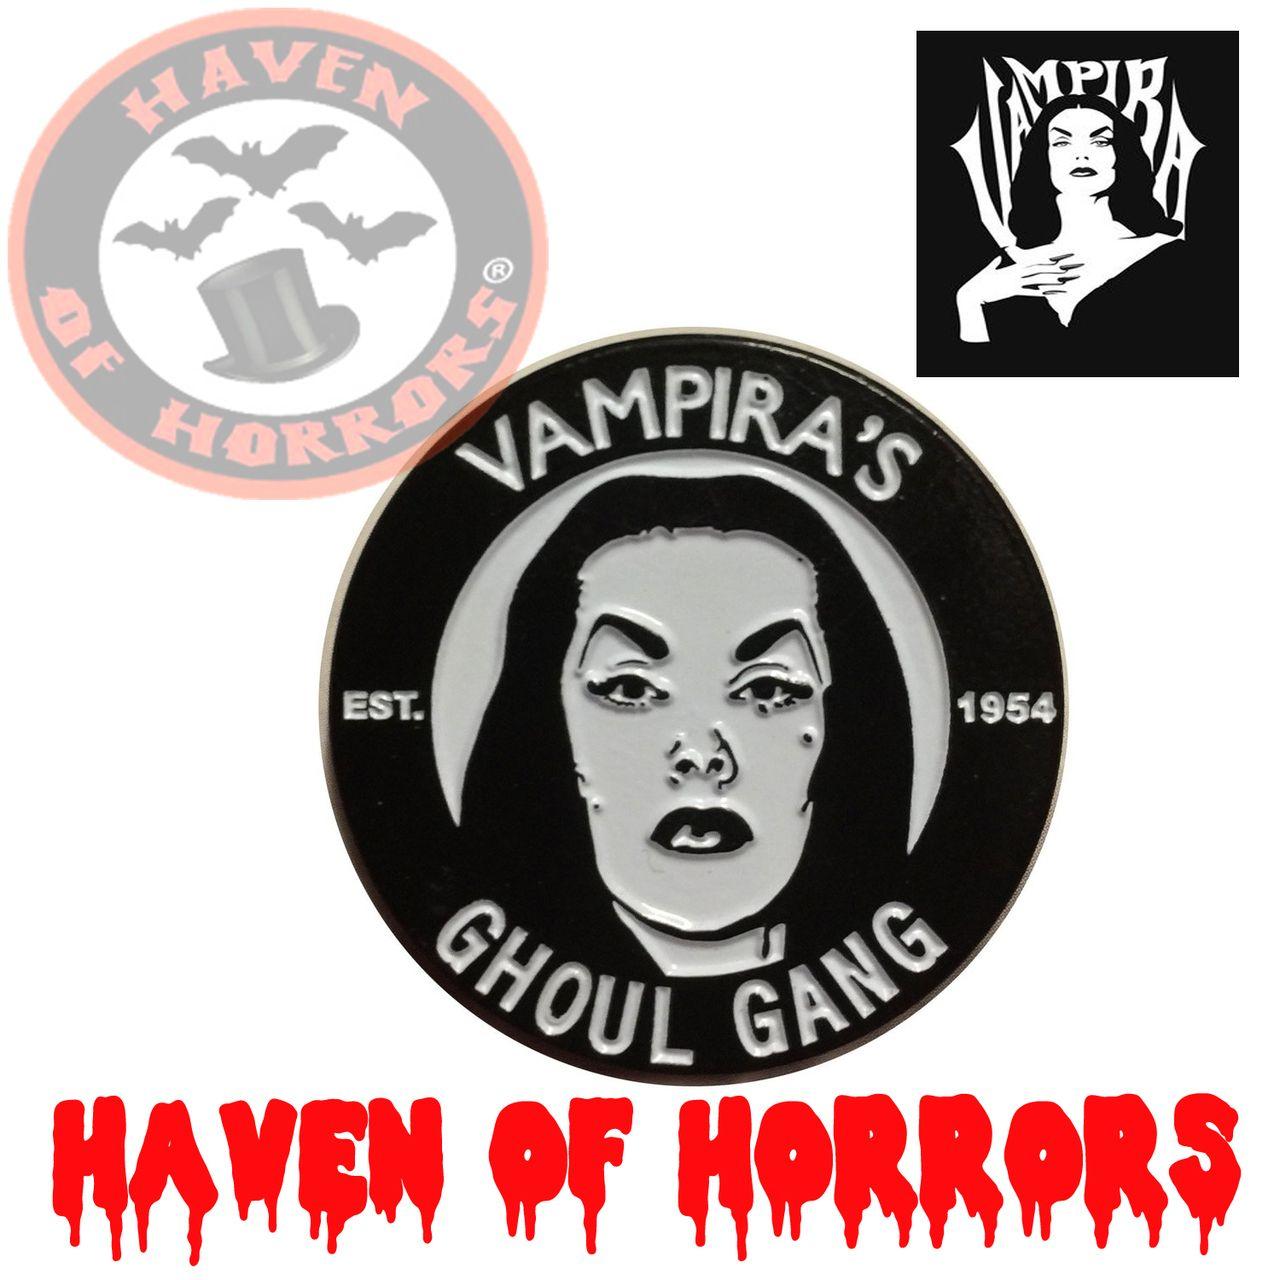 Vampira Logo - Vampira Ghoul Gang Pin - havenofhorrors